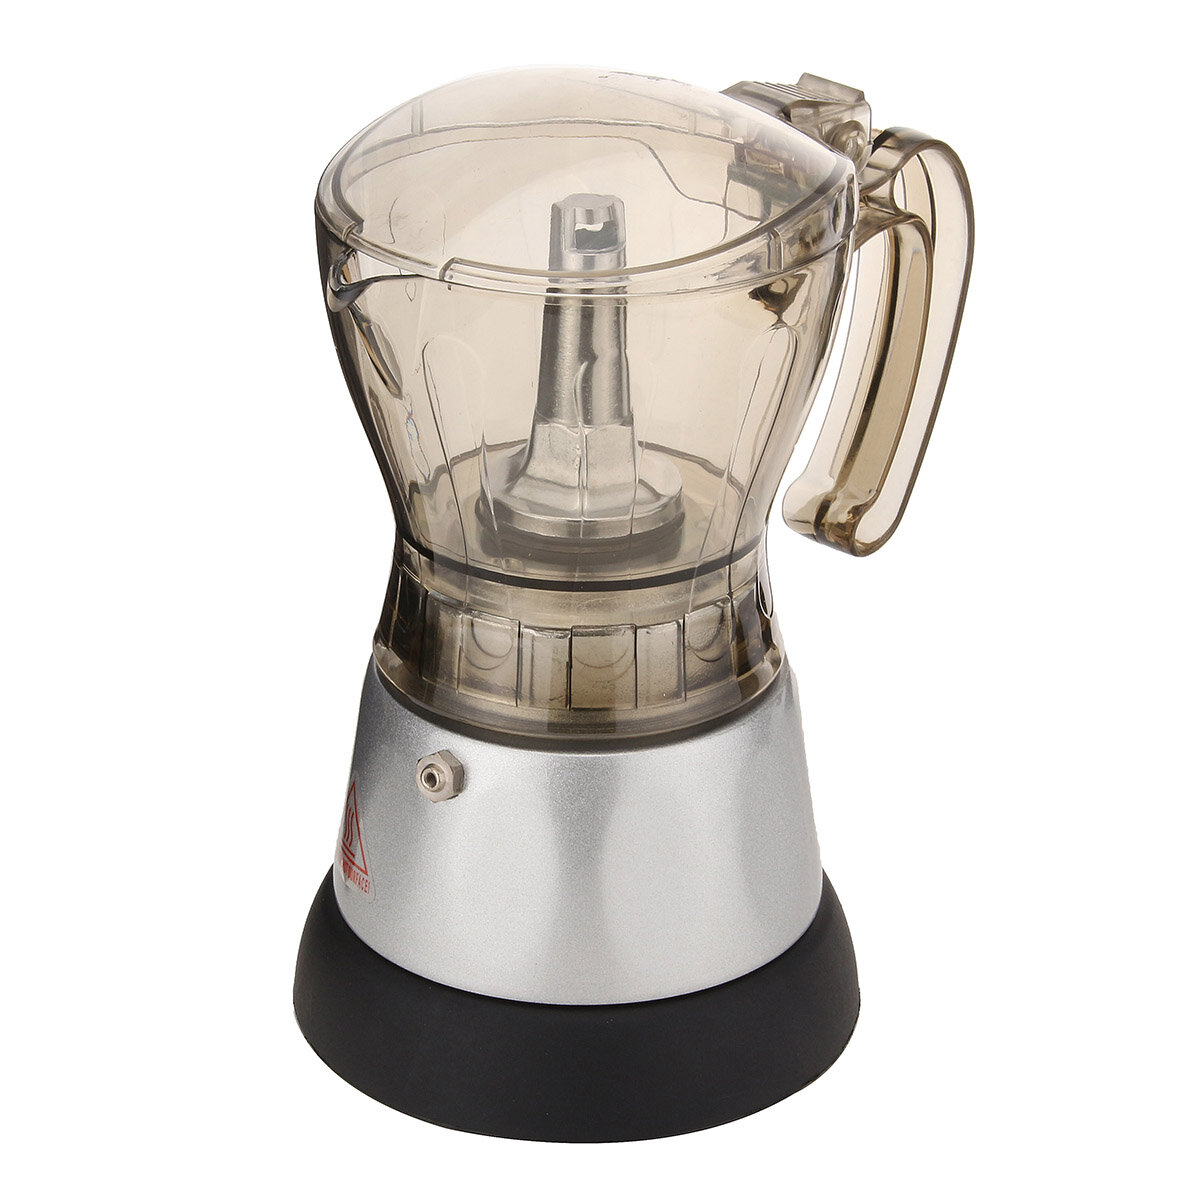 4 Cup Automatic Transparent Acrylic Coffee Maker Percolator Moka Pot Stovetop Espresso Pot Machine